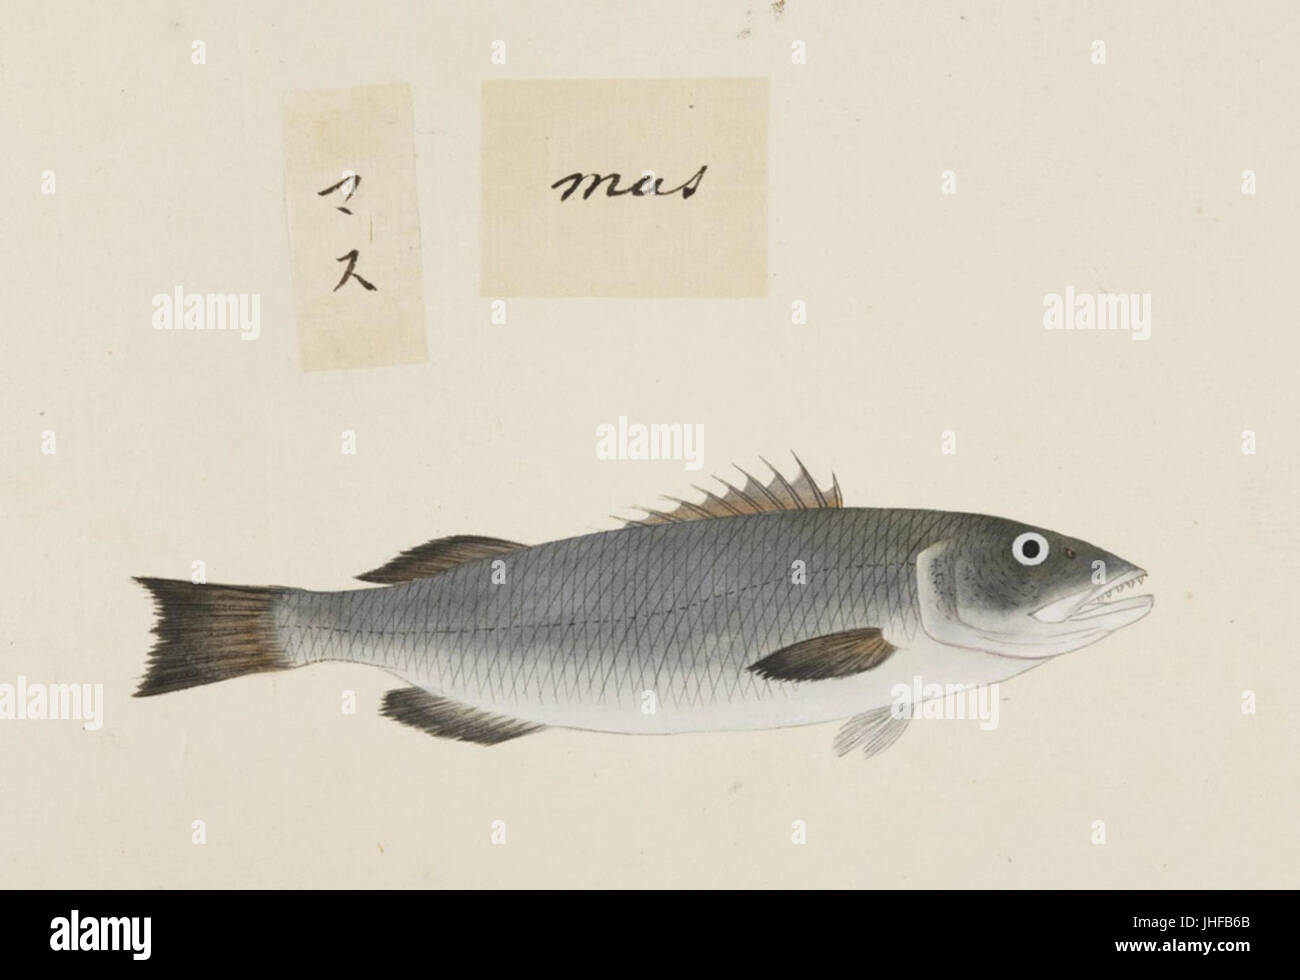 Naturalis Biodiversity Center - RMNH.ART.490 - Unidentified fish - Kawahara Keiga - 1823 - 1829 - Siebold Collection - pencil drawing - water colour Stock Photo